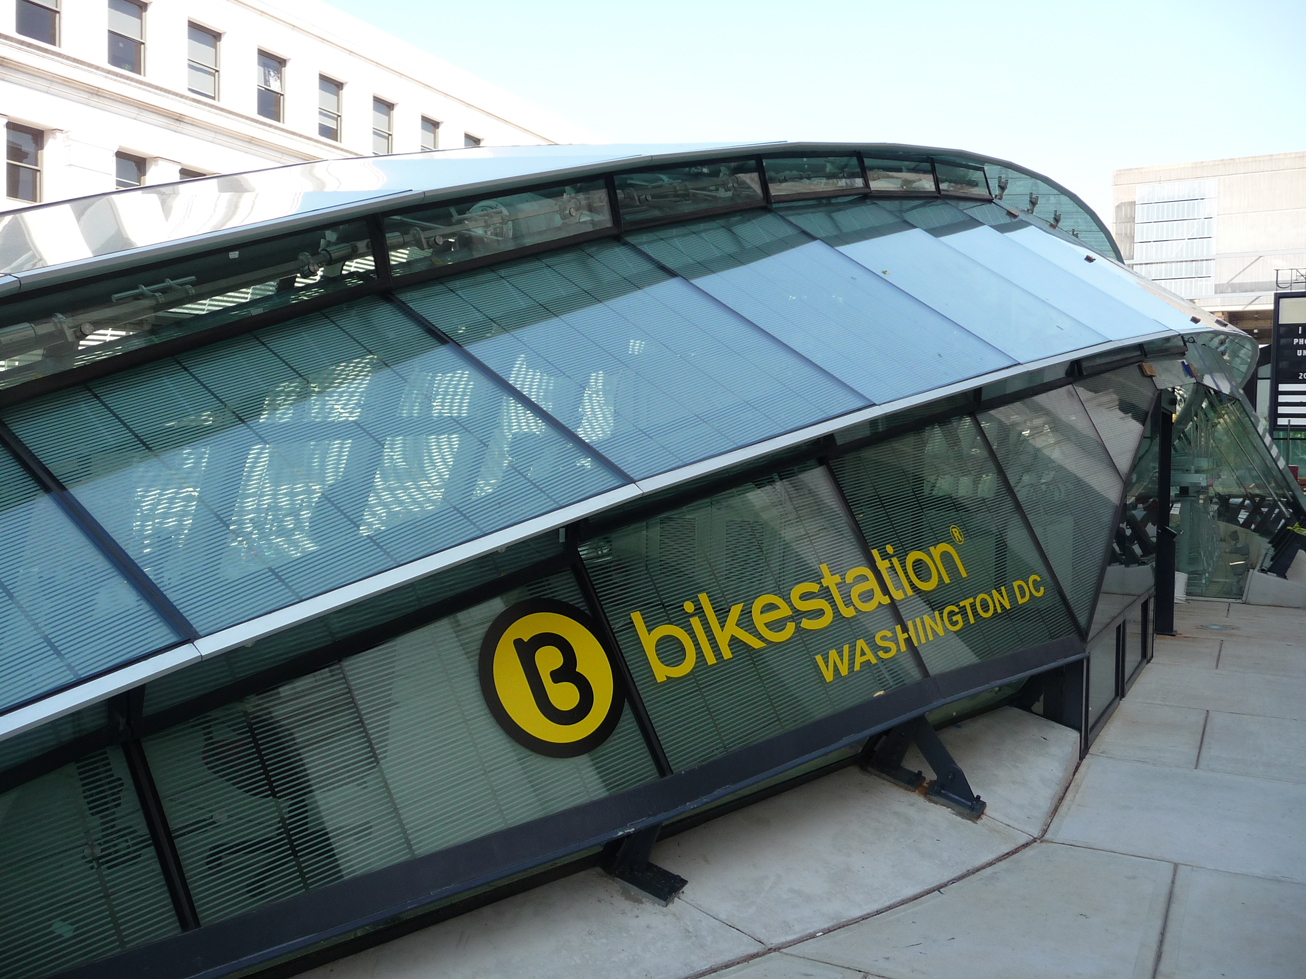 Bike Station – Washington DC